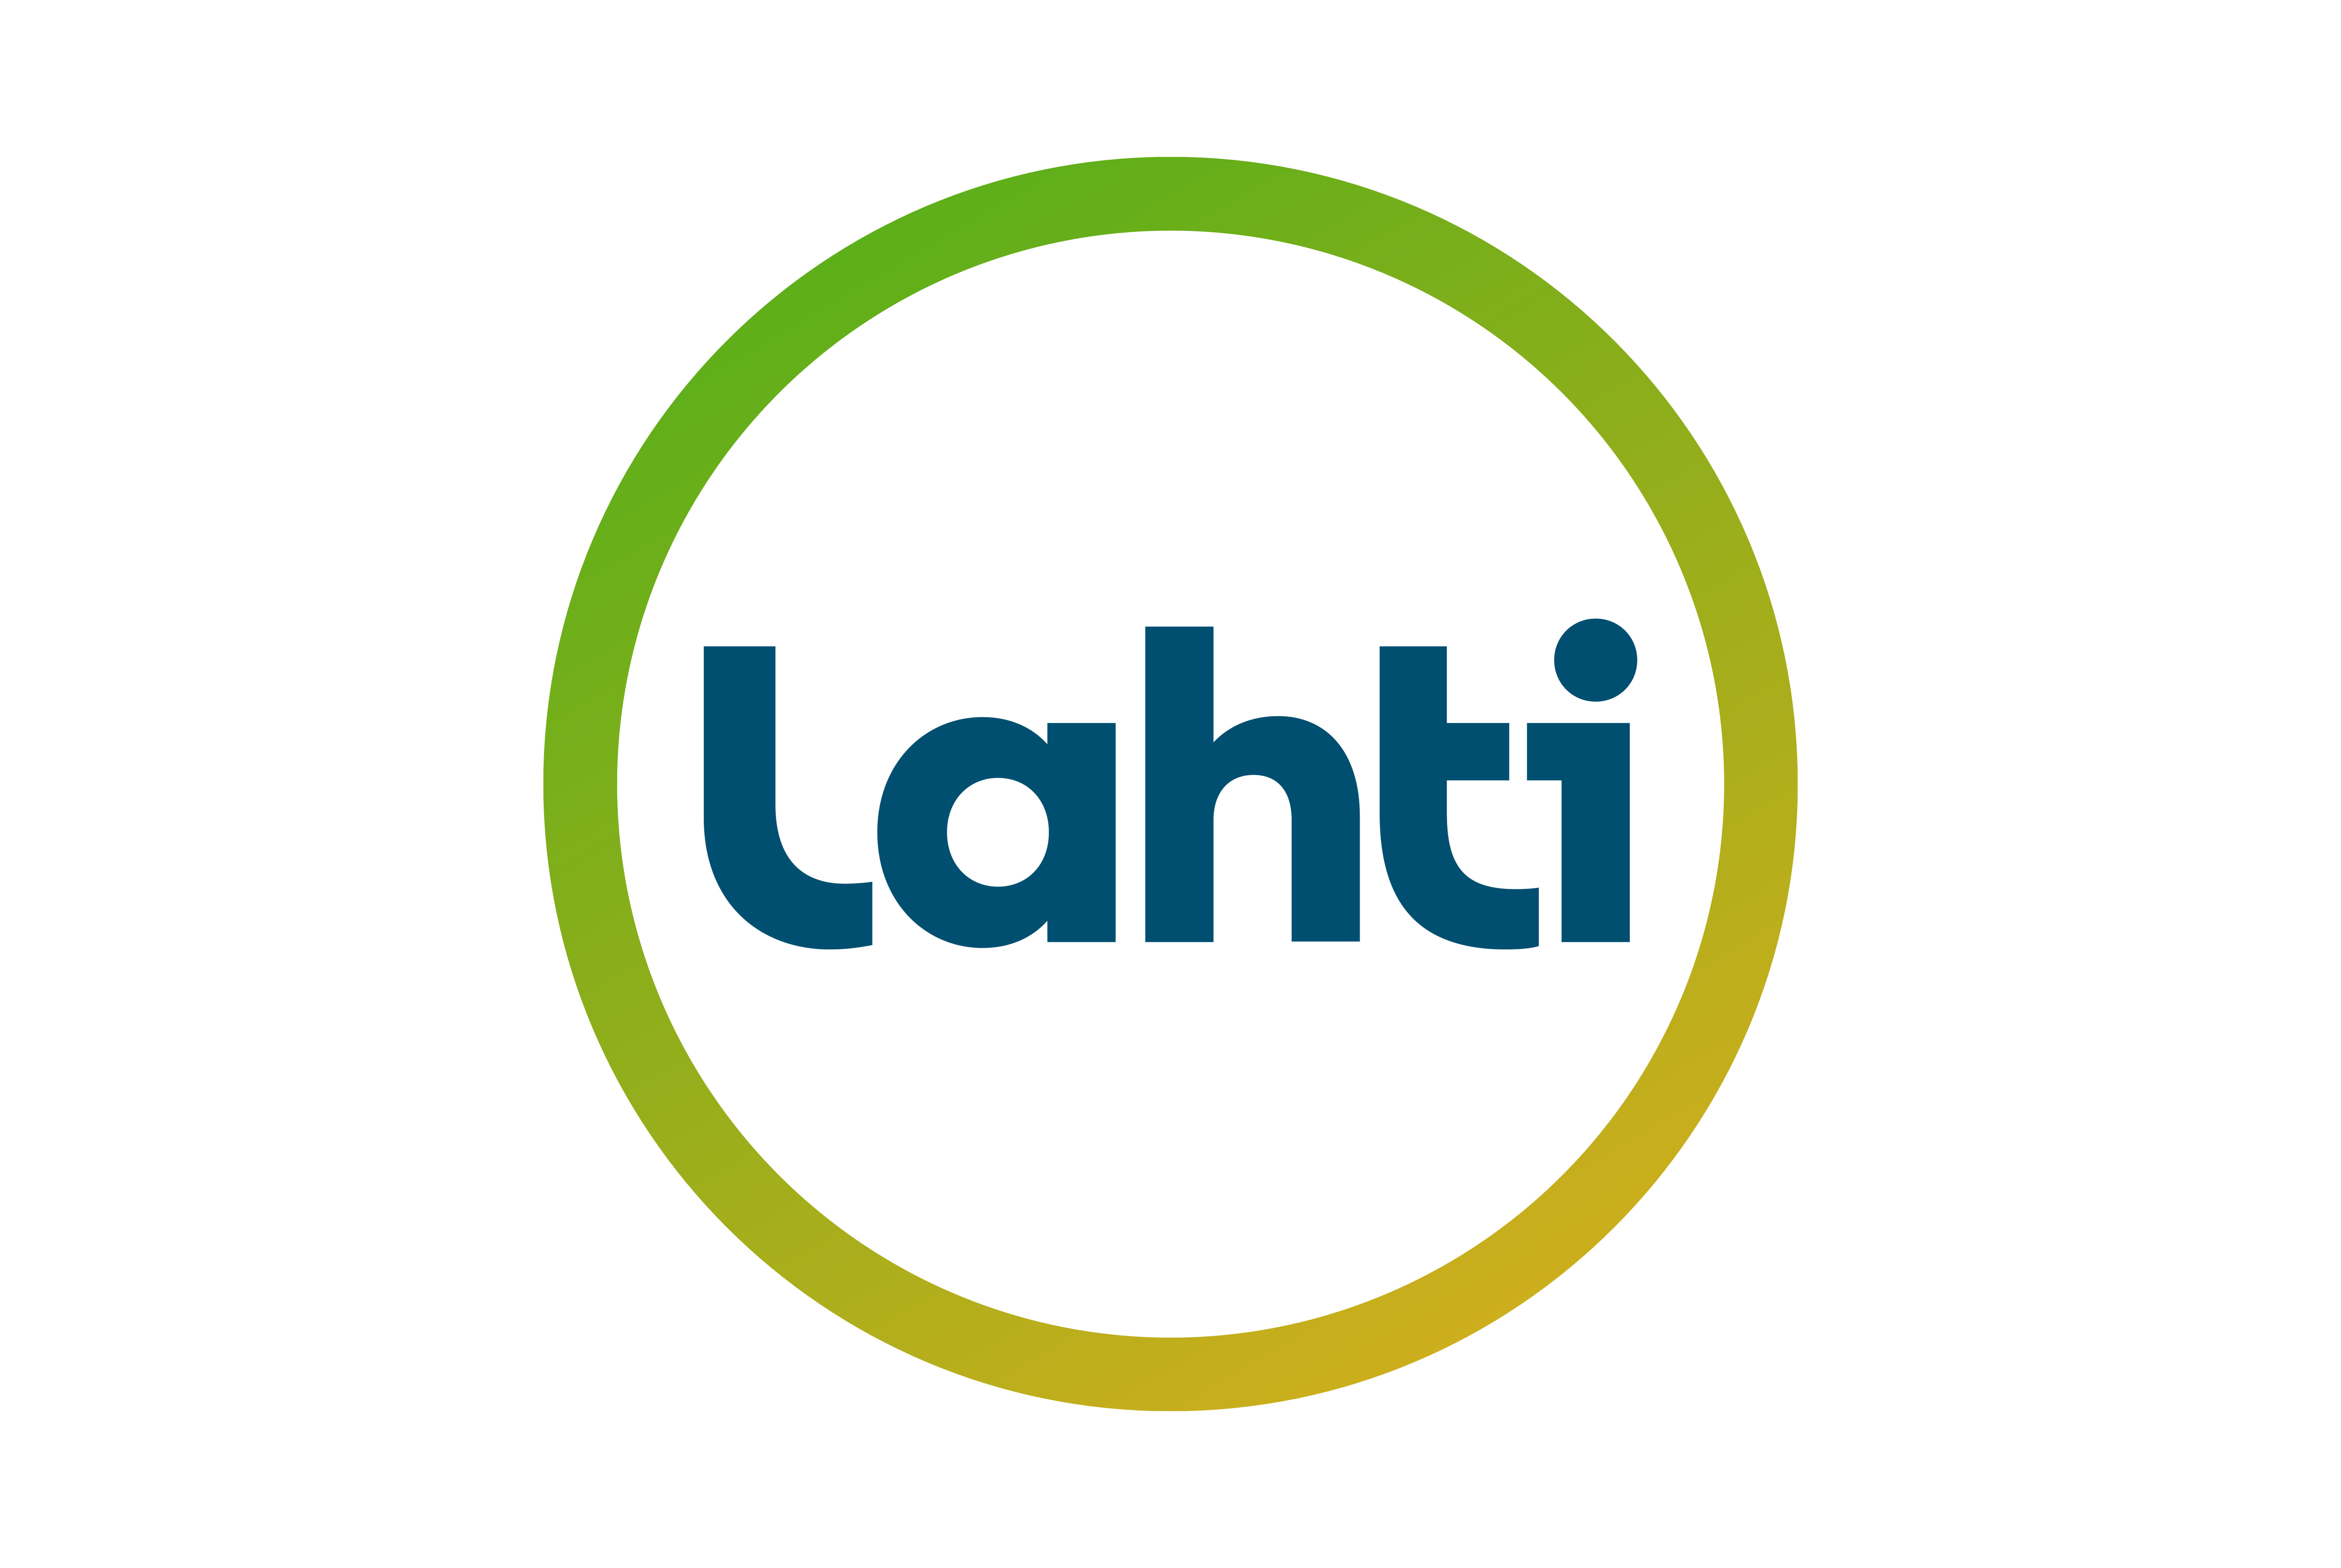 Lahti - Leading environmental city in Finland 